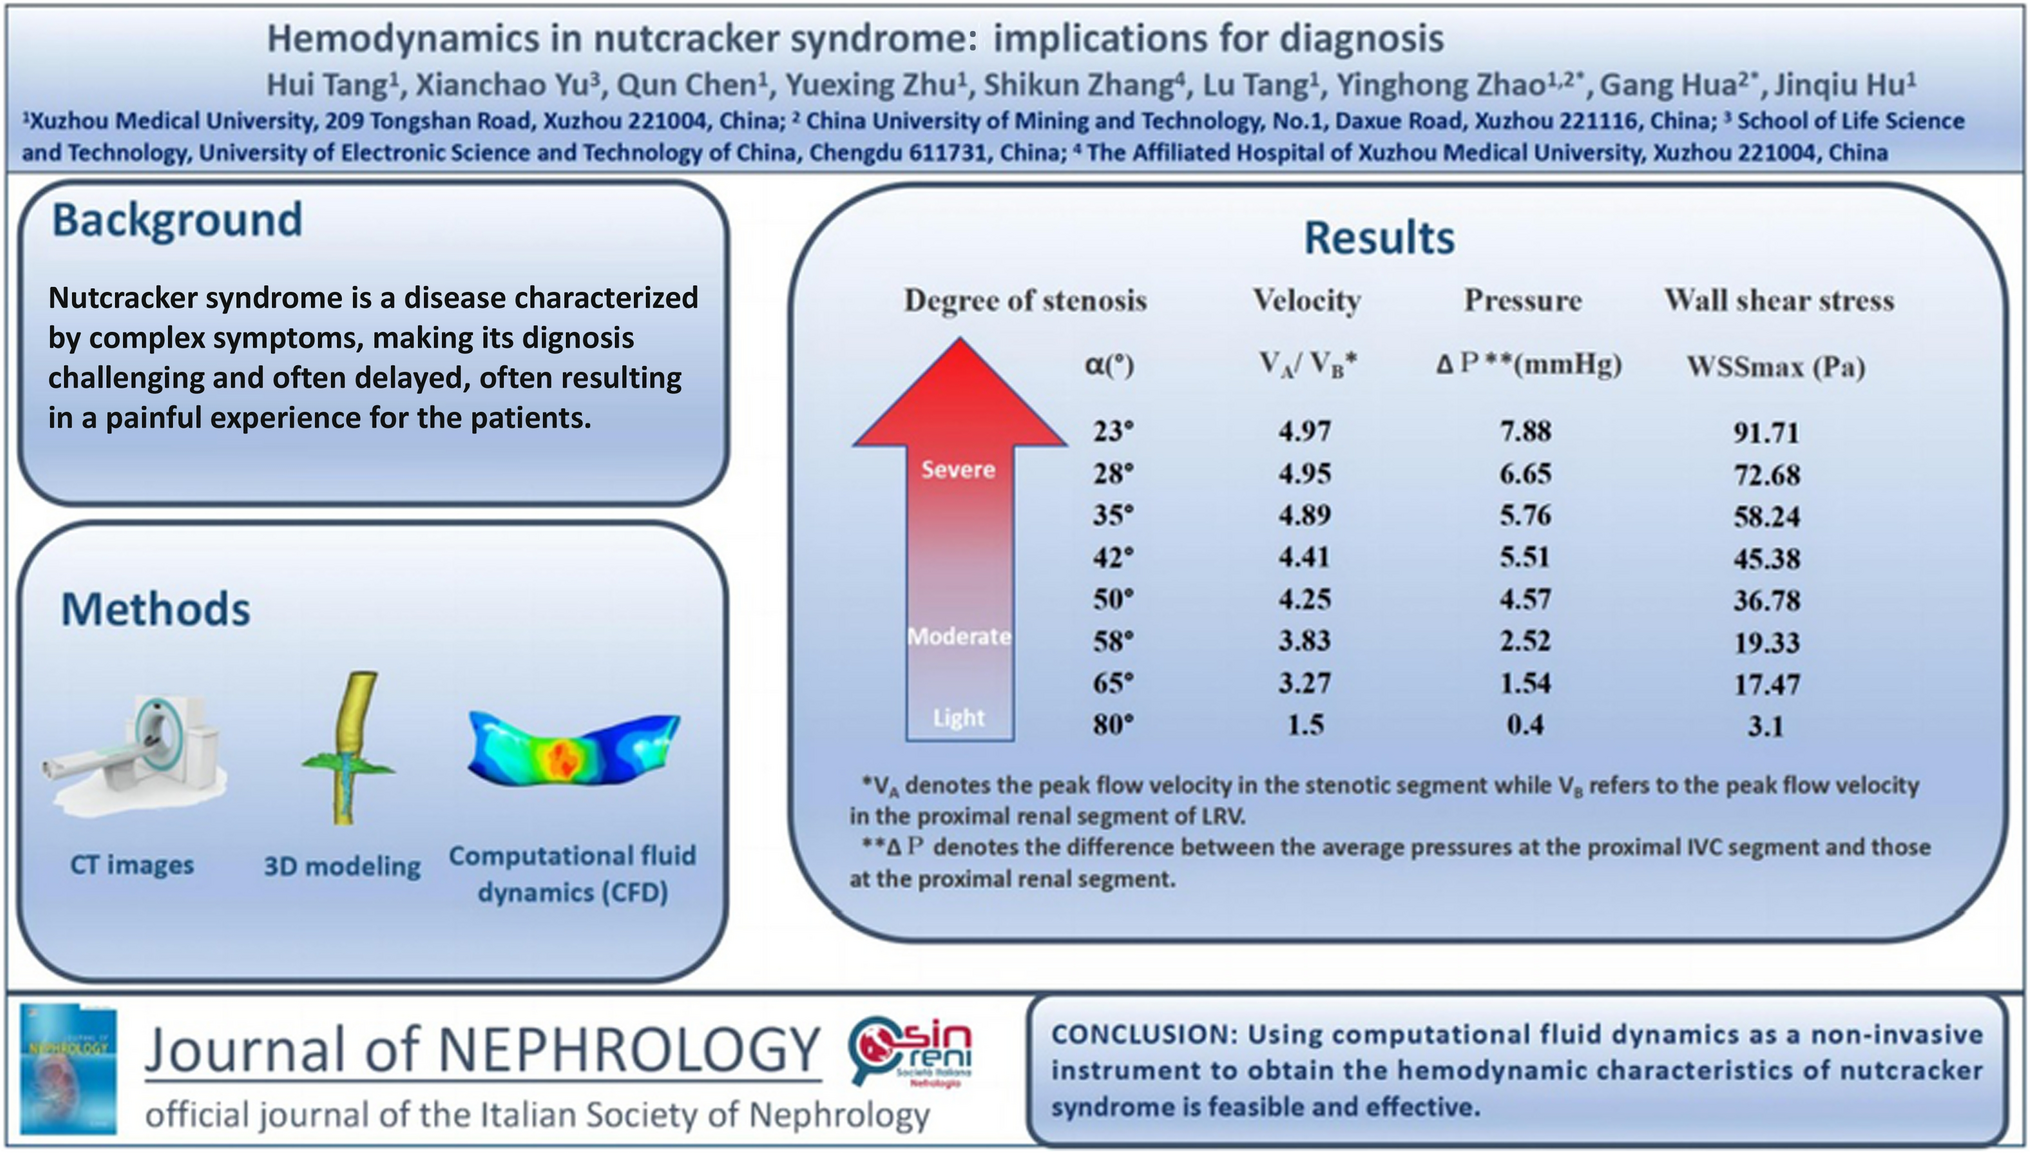 Hemodynamics in nutcracker syndrome: implications for diagnosis